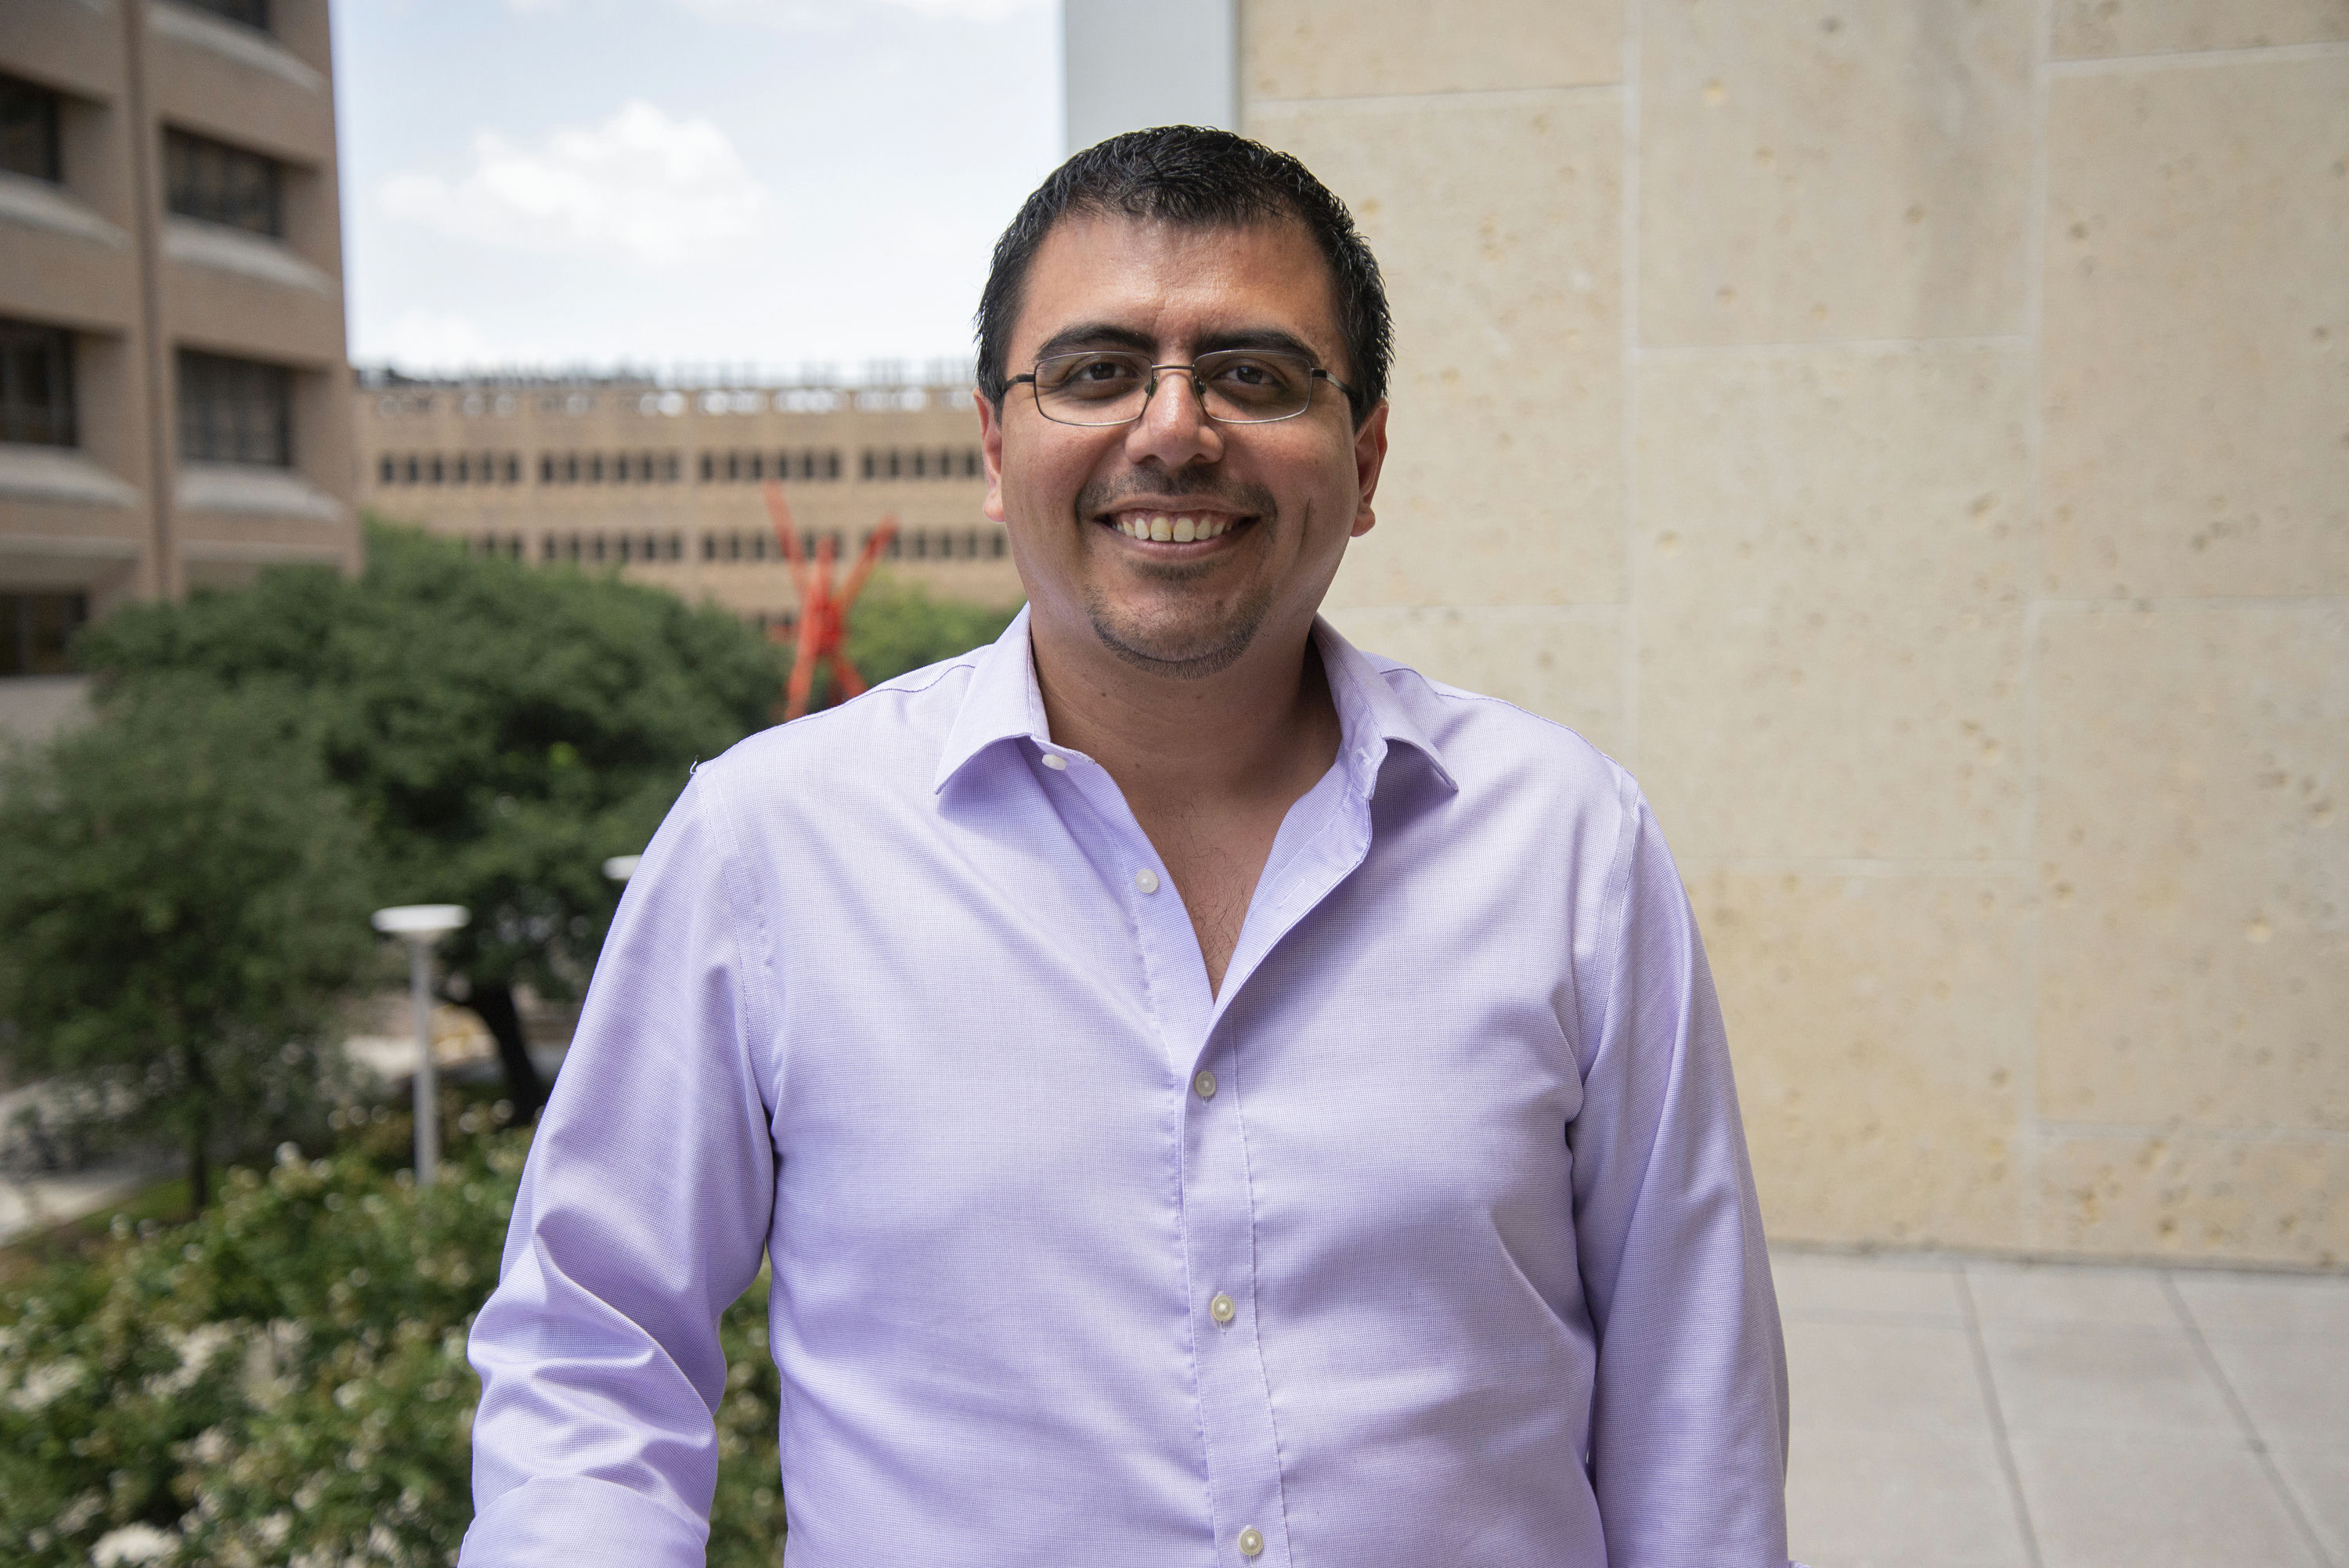 Pedro Santacruz in a purple shirt and glasses smiling.